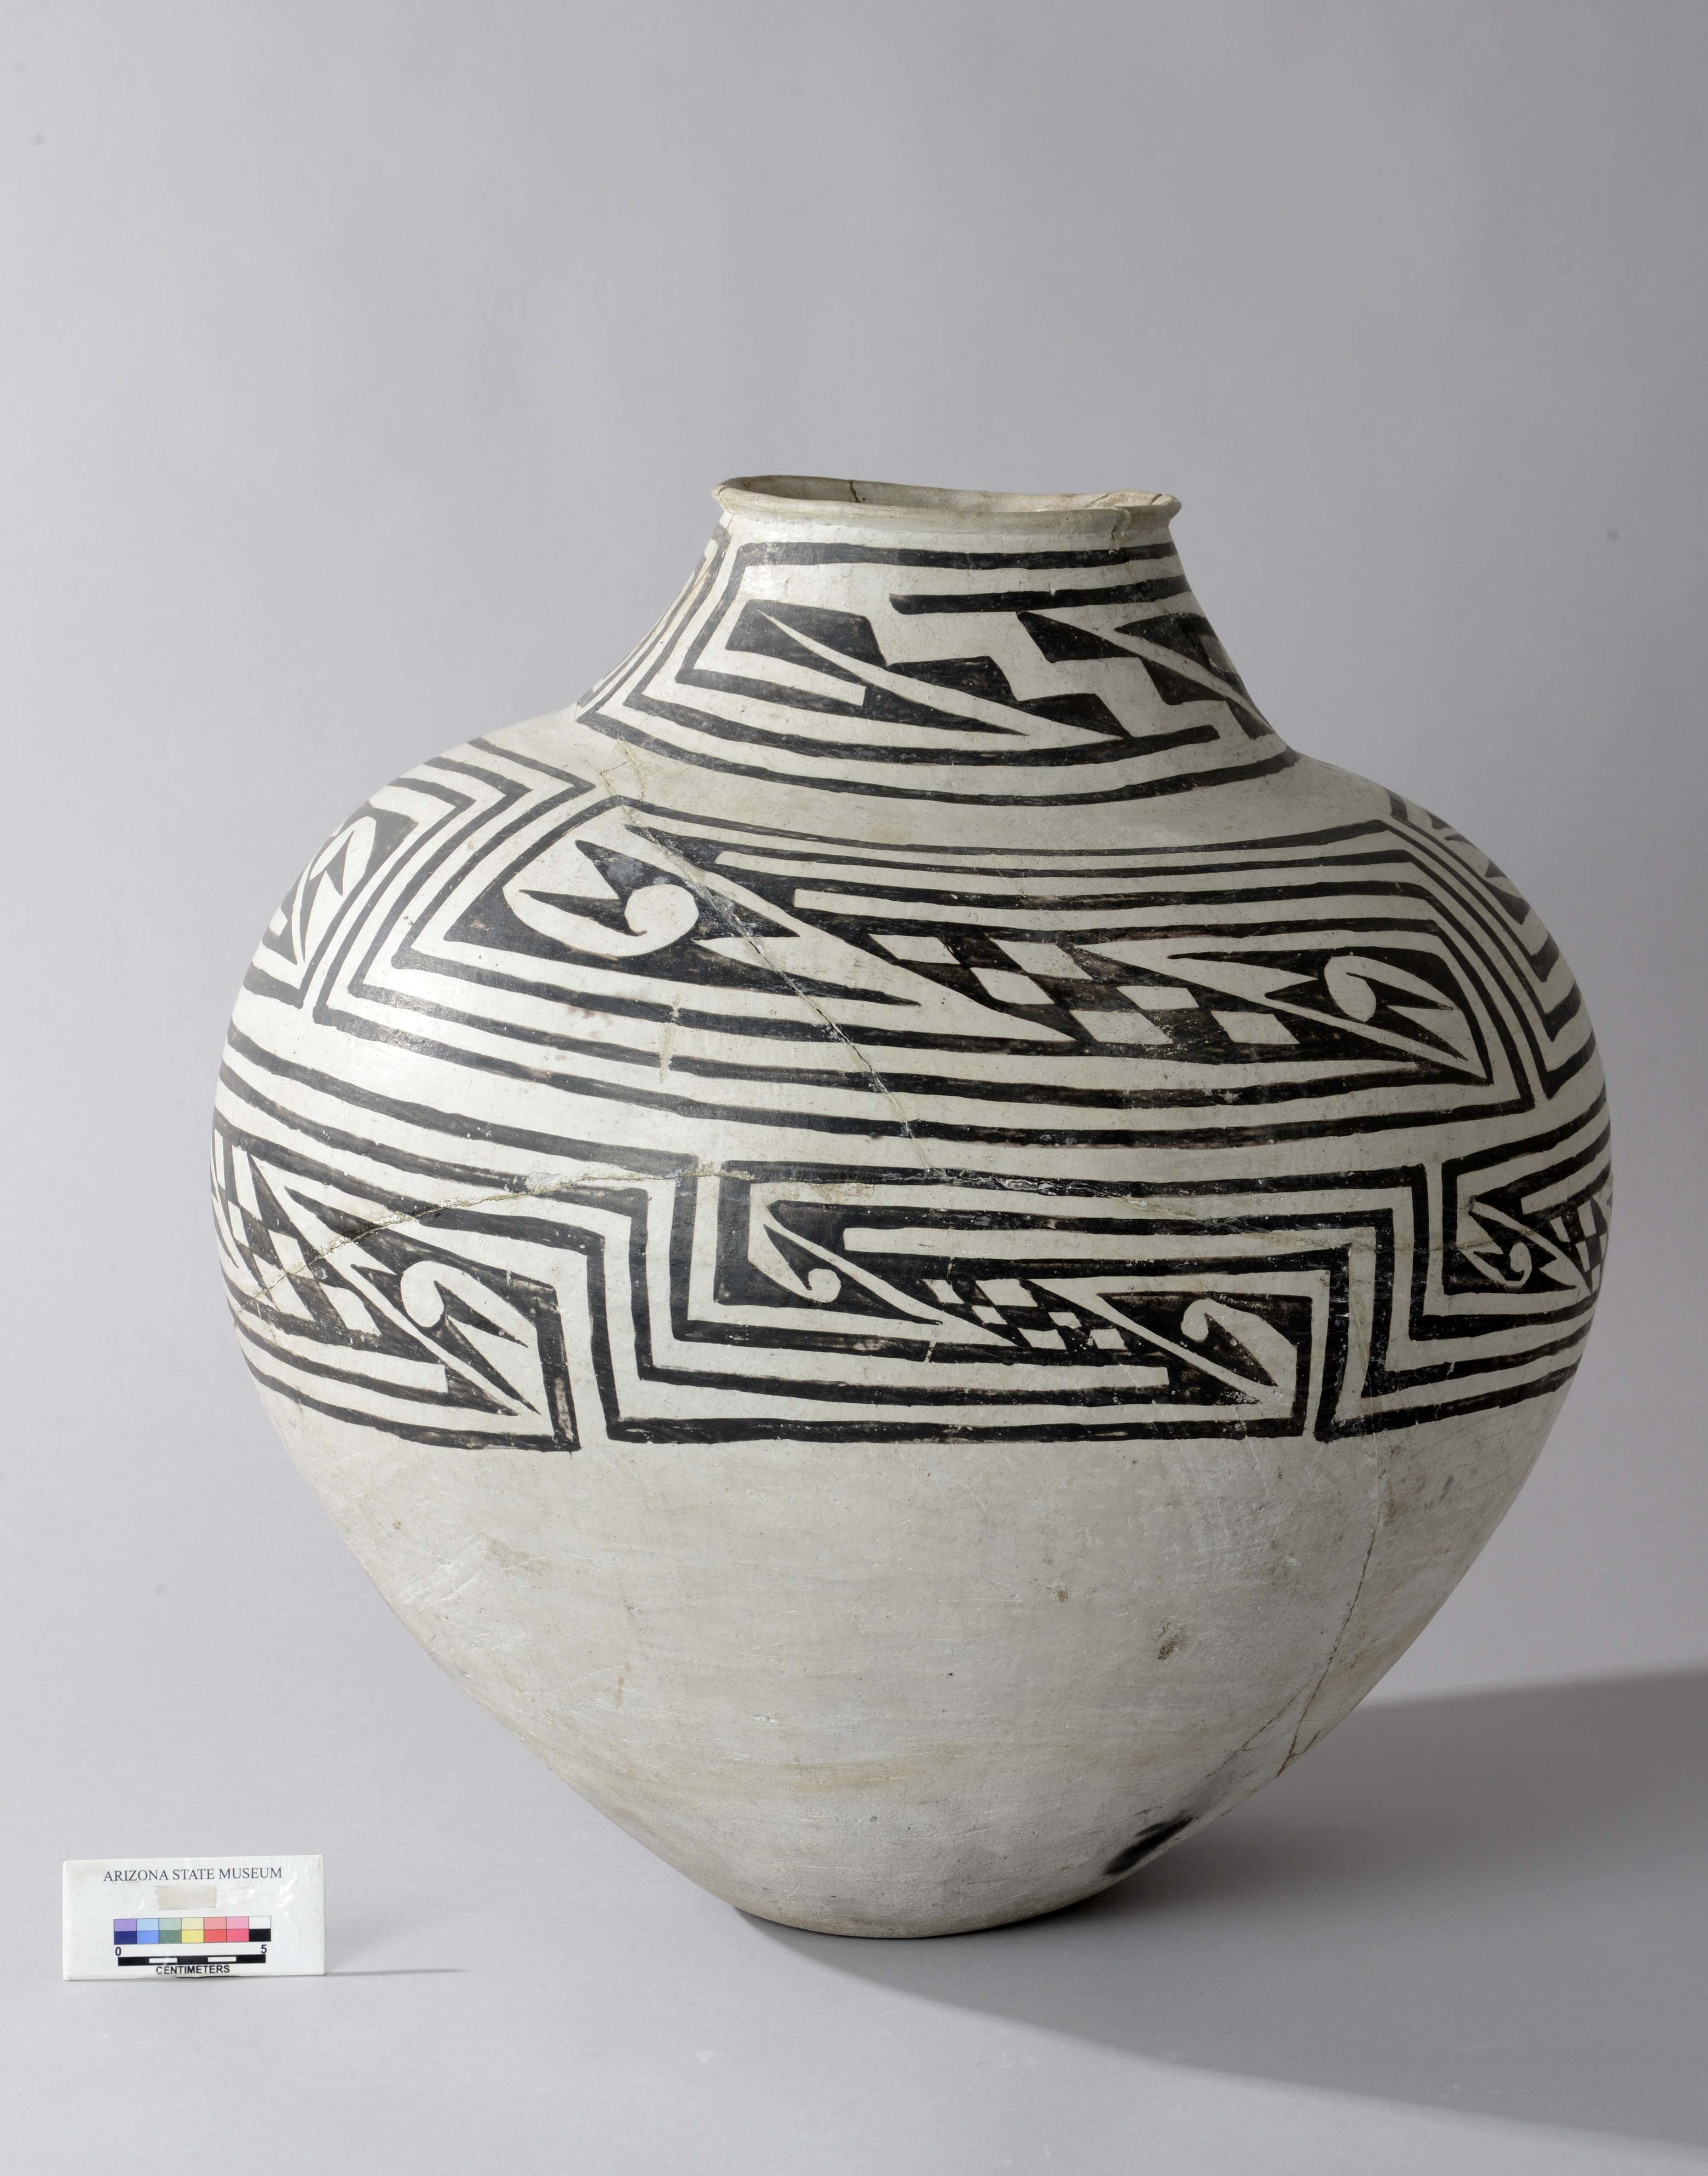 Ceramics  Museum of Northern Arizona